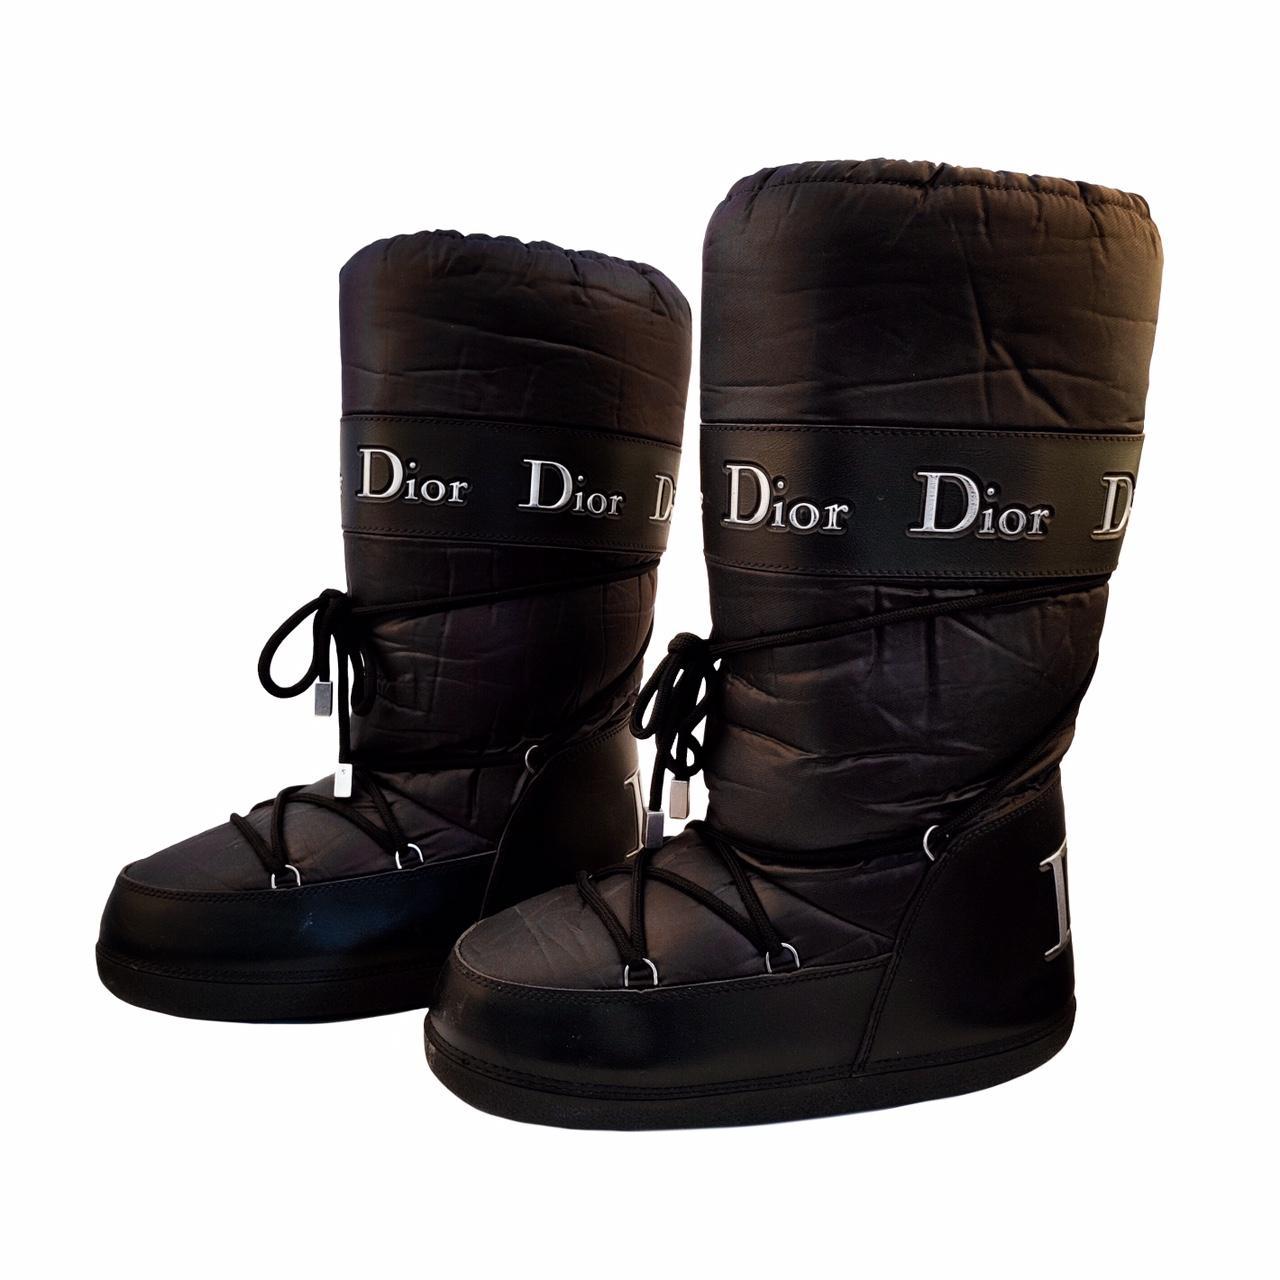 Christian Dior Snow Boots ️ Size: EU 41-43. Be just... - Depop